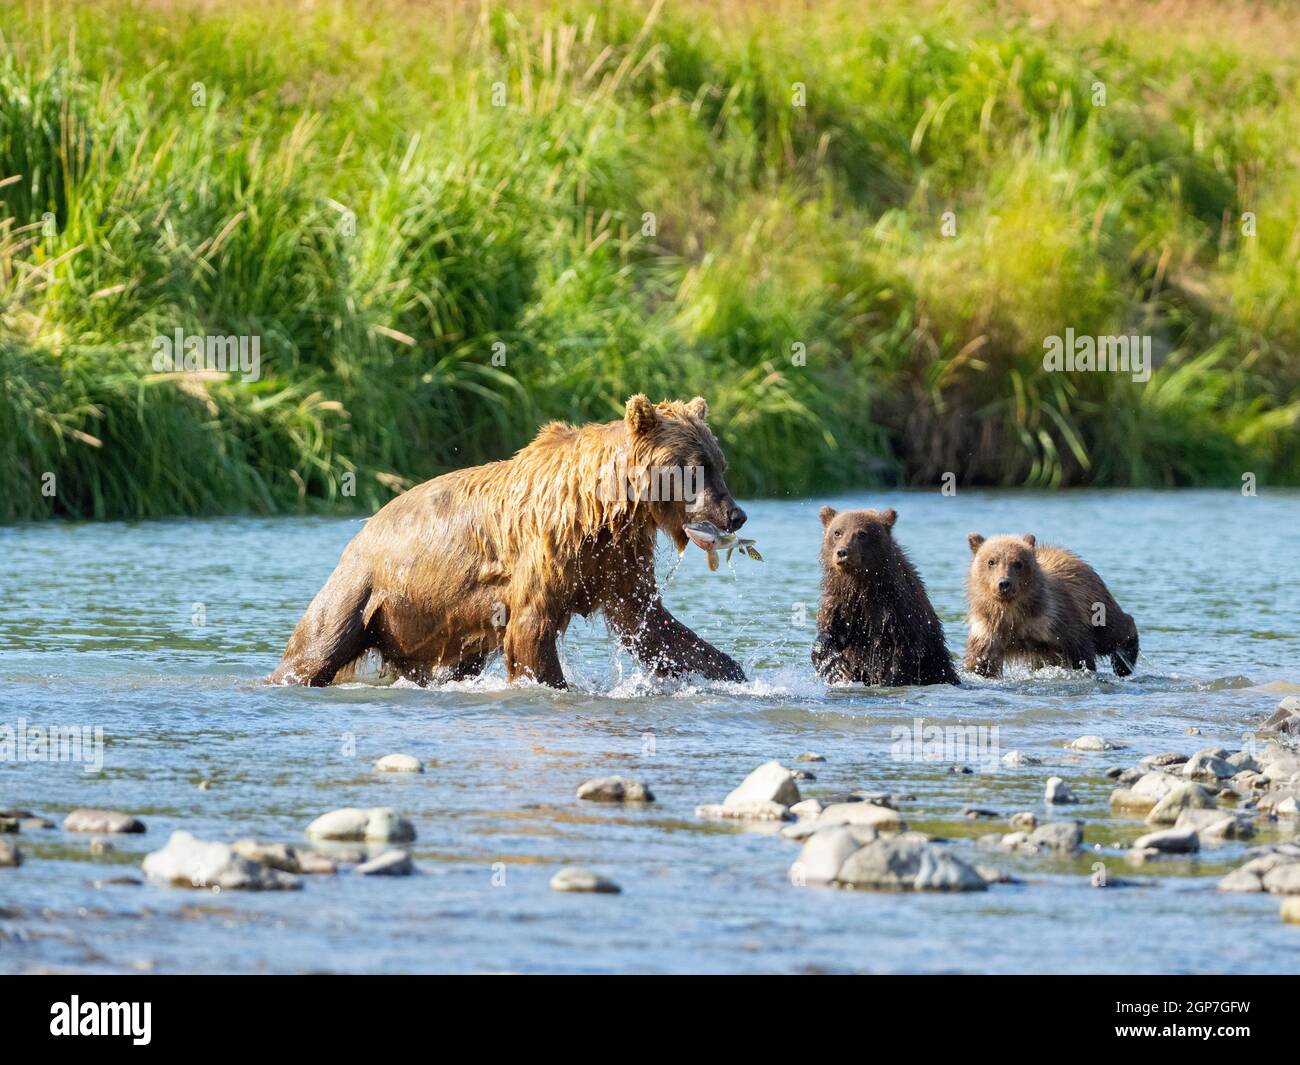 A Brown or Grizzly Bear, Geographic Harbor, Katmai National Park, Alaska. Stock Photo